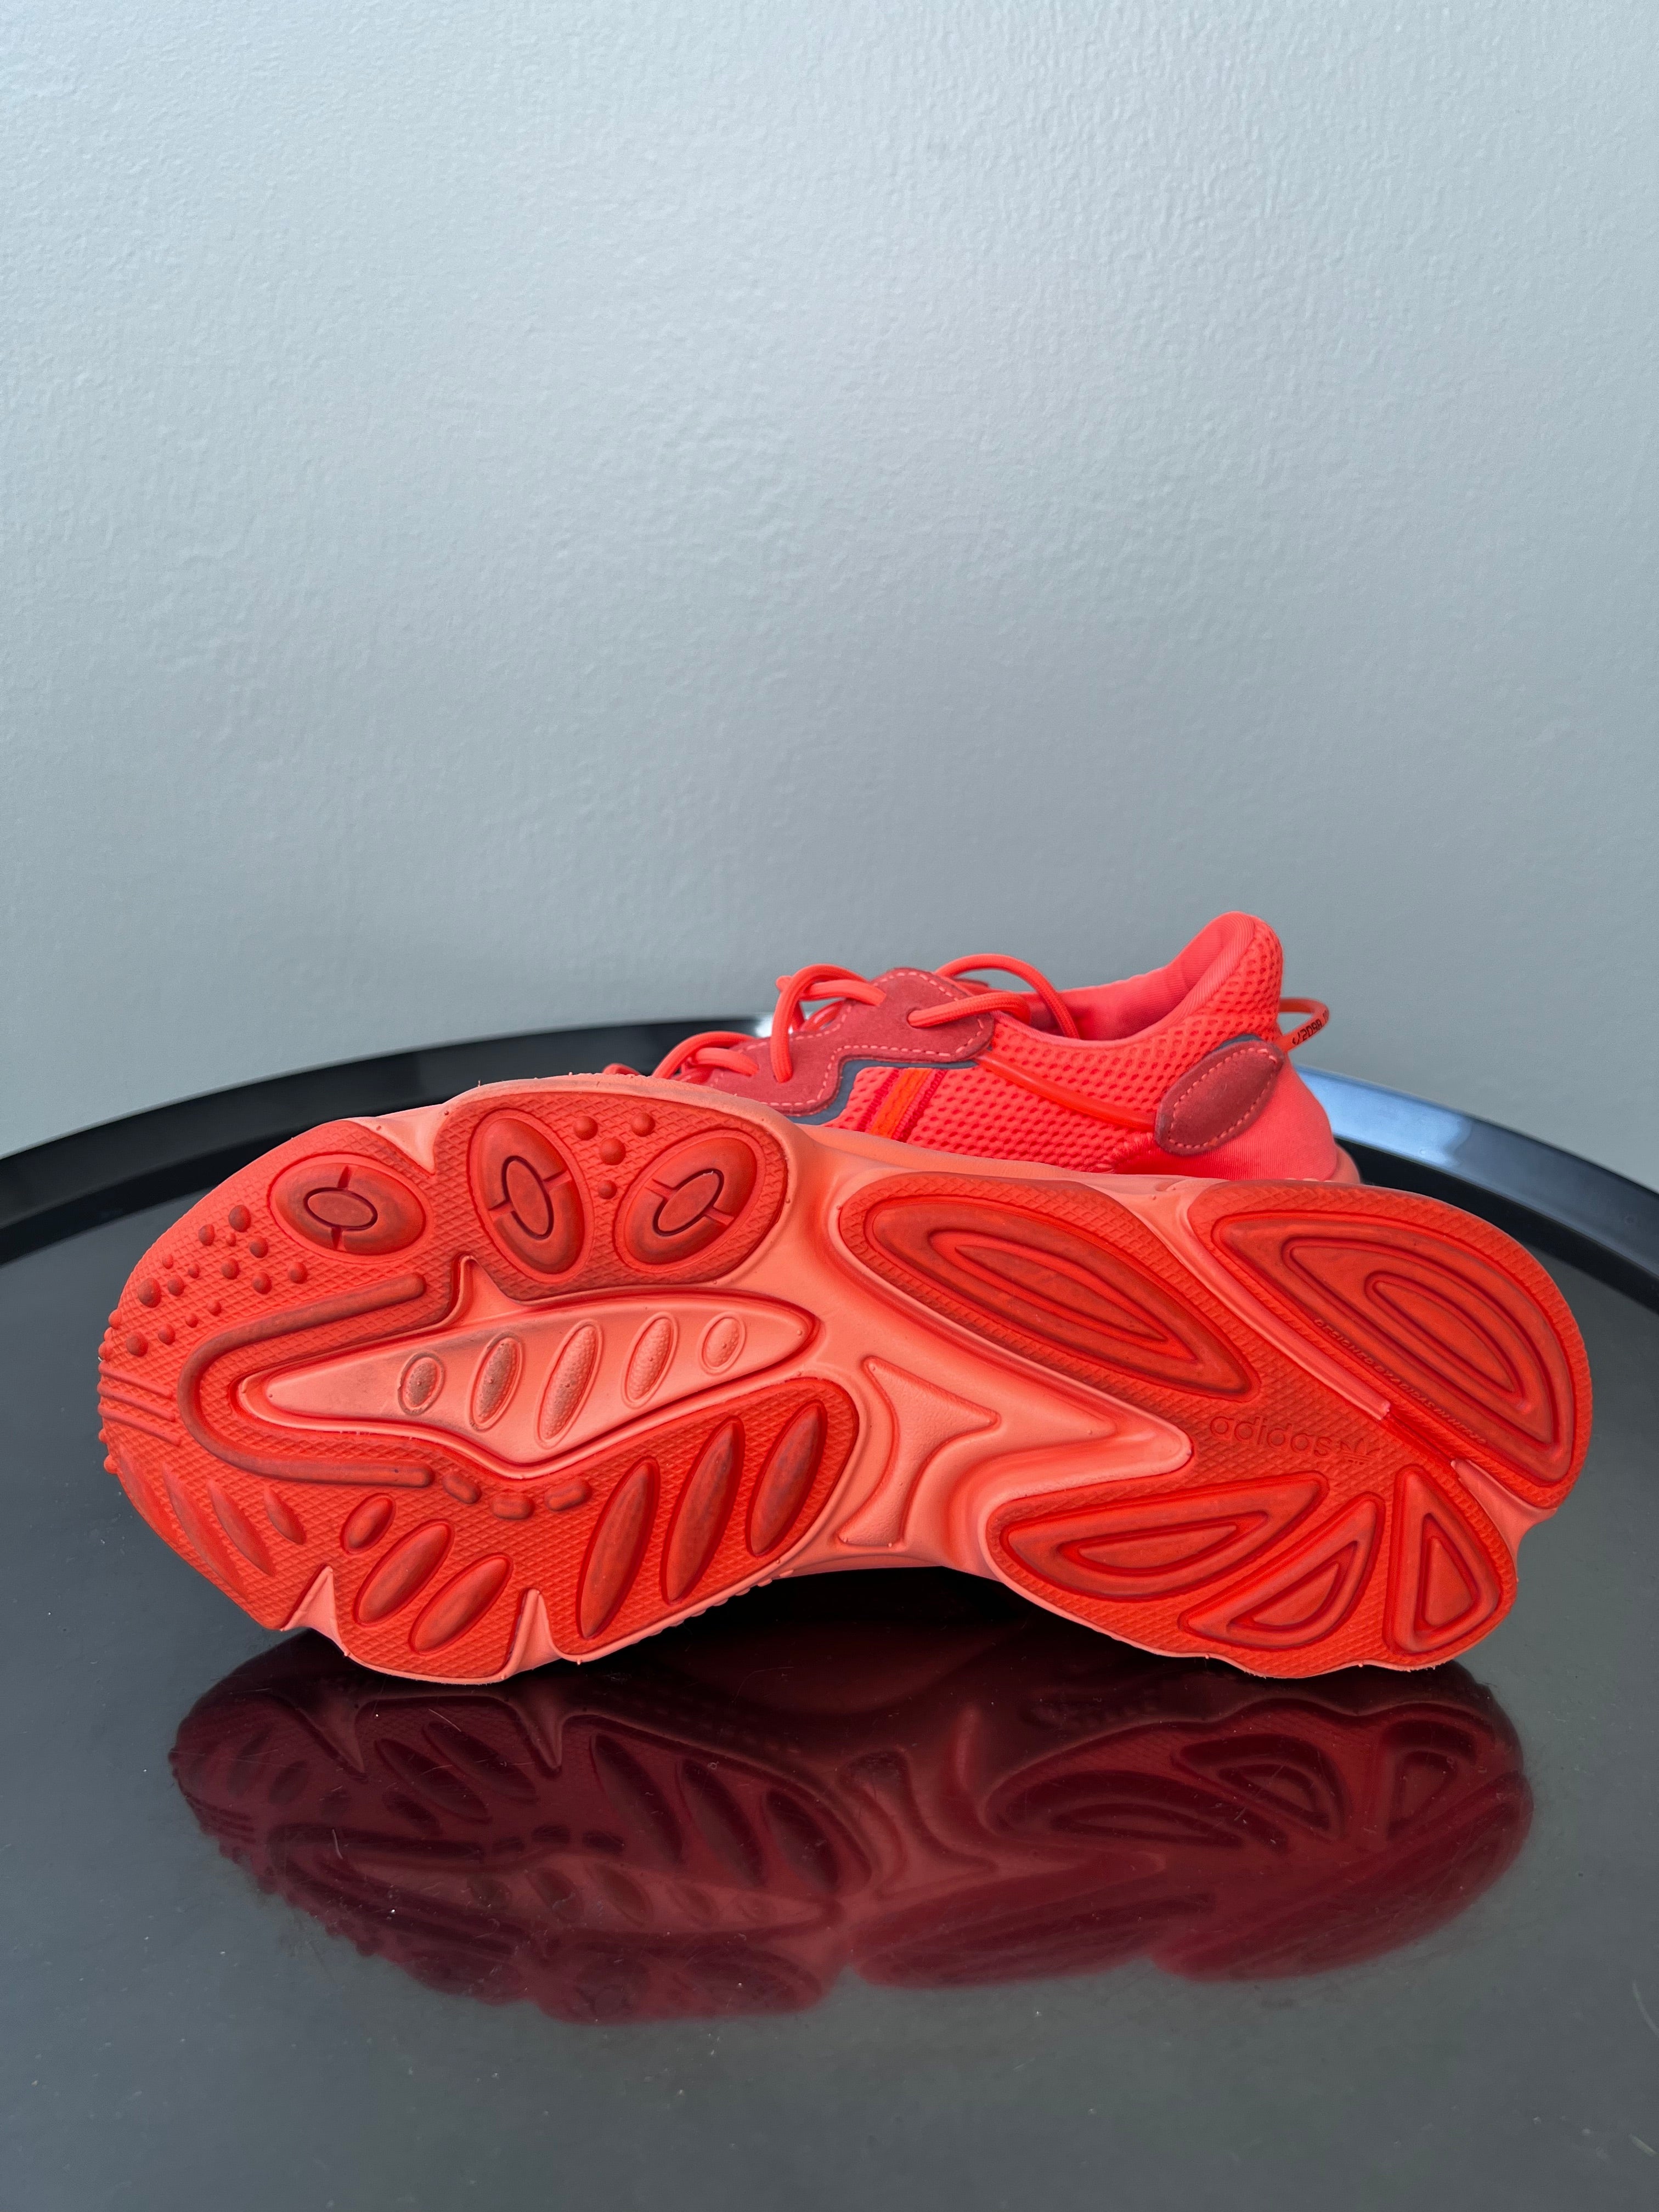 Bright orange sneakers. - ADIDAS